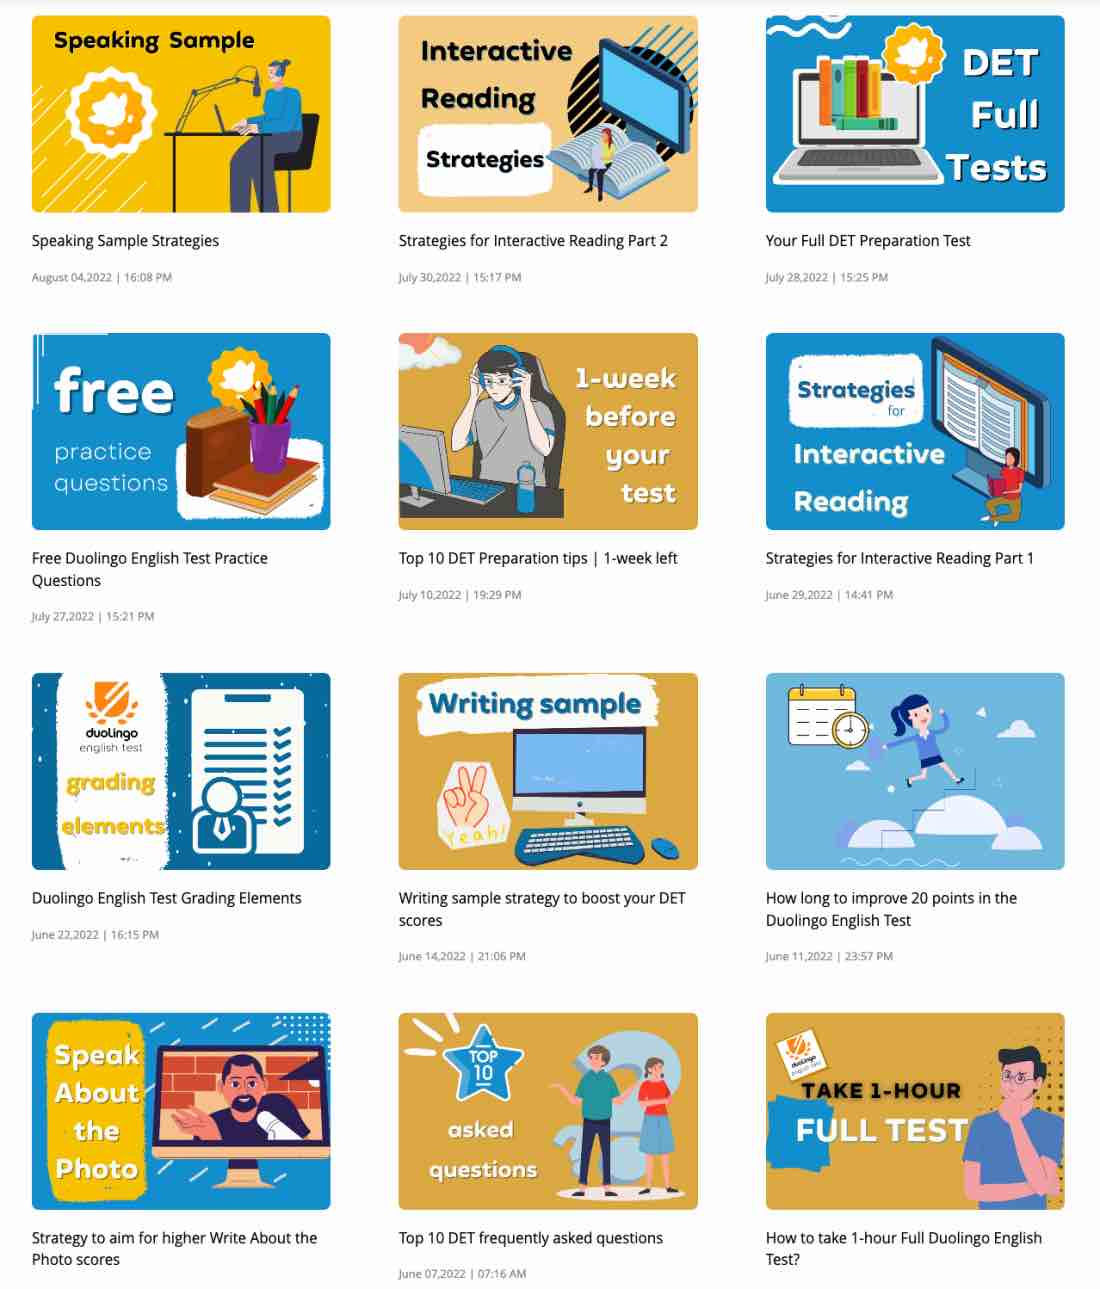 DET Ready articles, Duolingo English Test, DET Practice Platform, DET Ready, DET Ready Practice